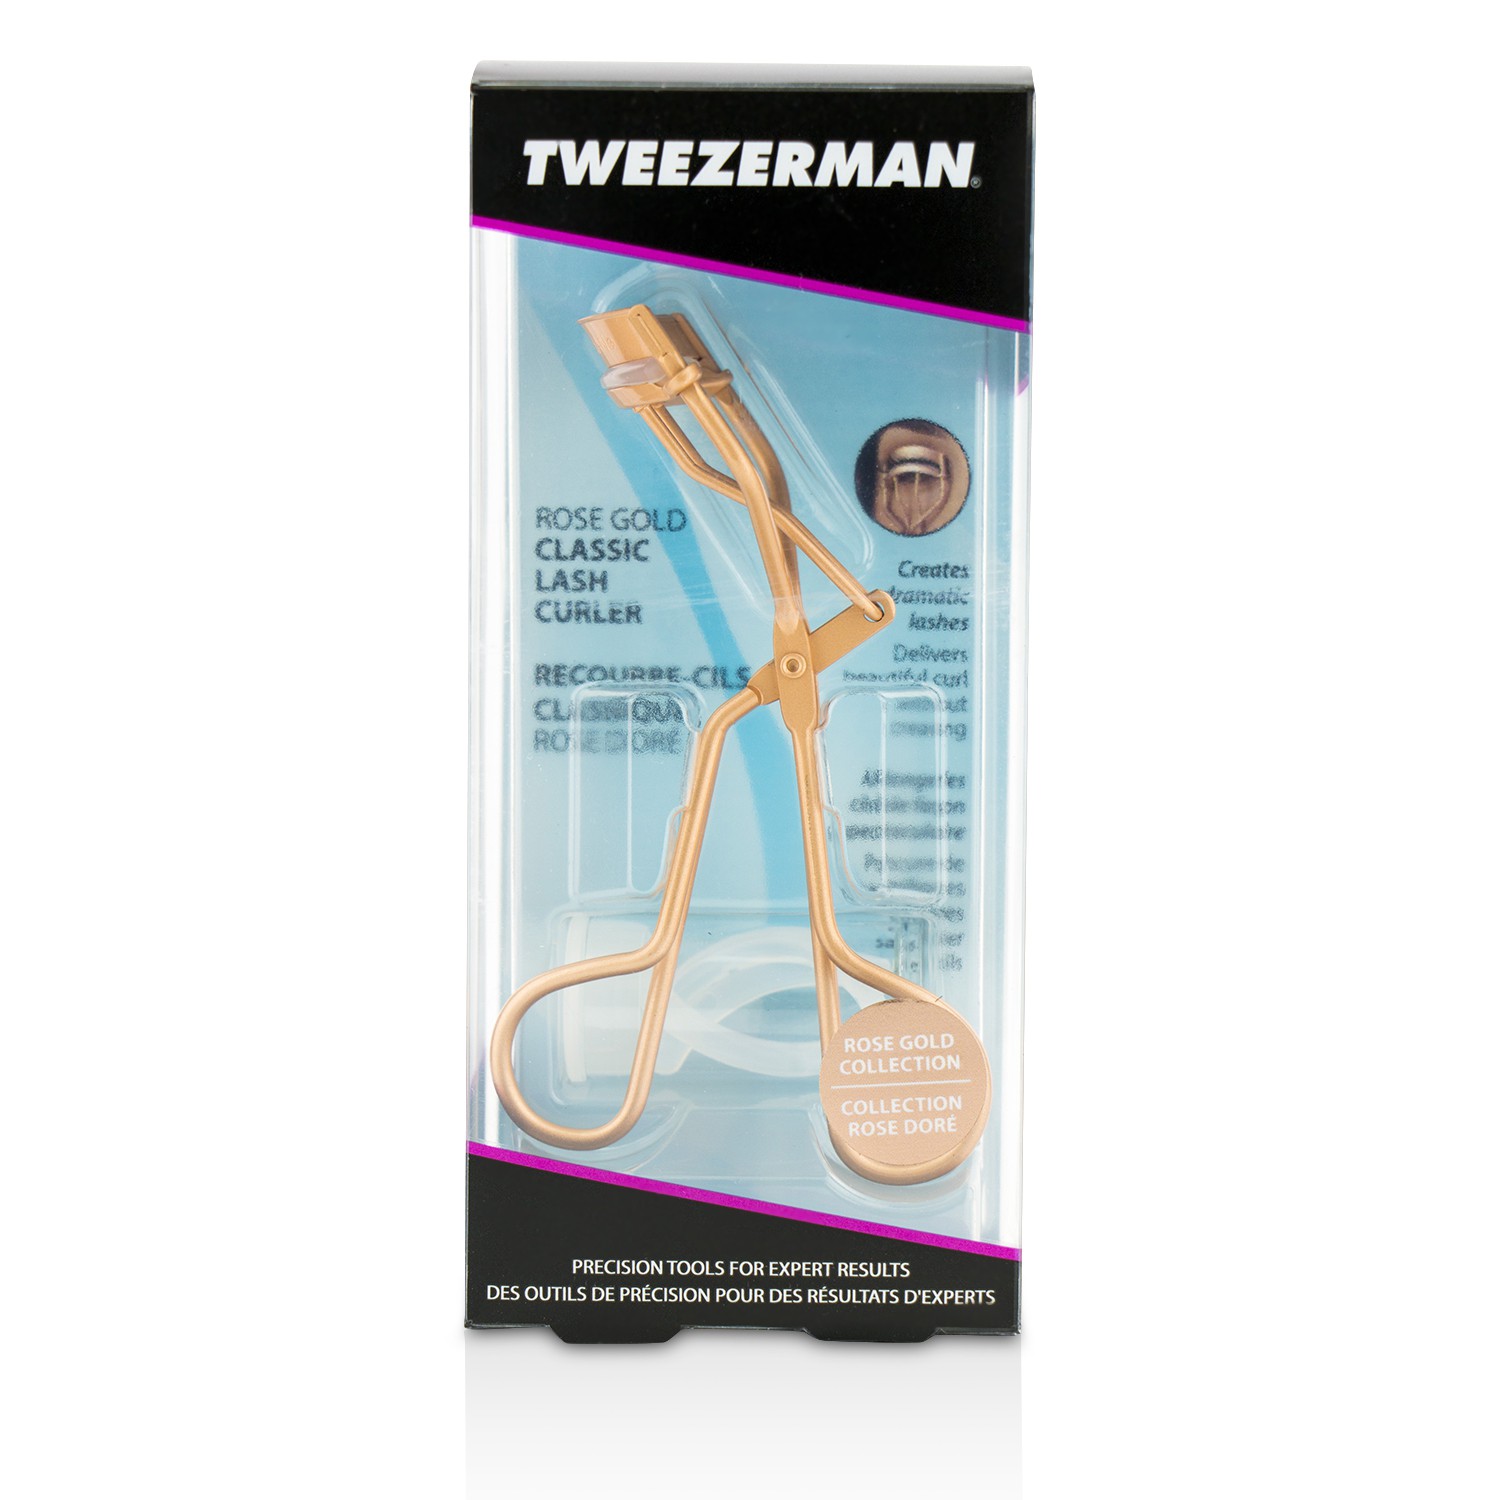 Classic Curler (Rose Gold Collection) Tweezerman Image